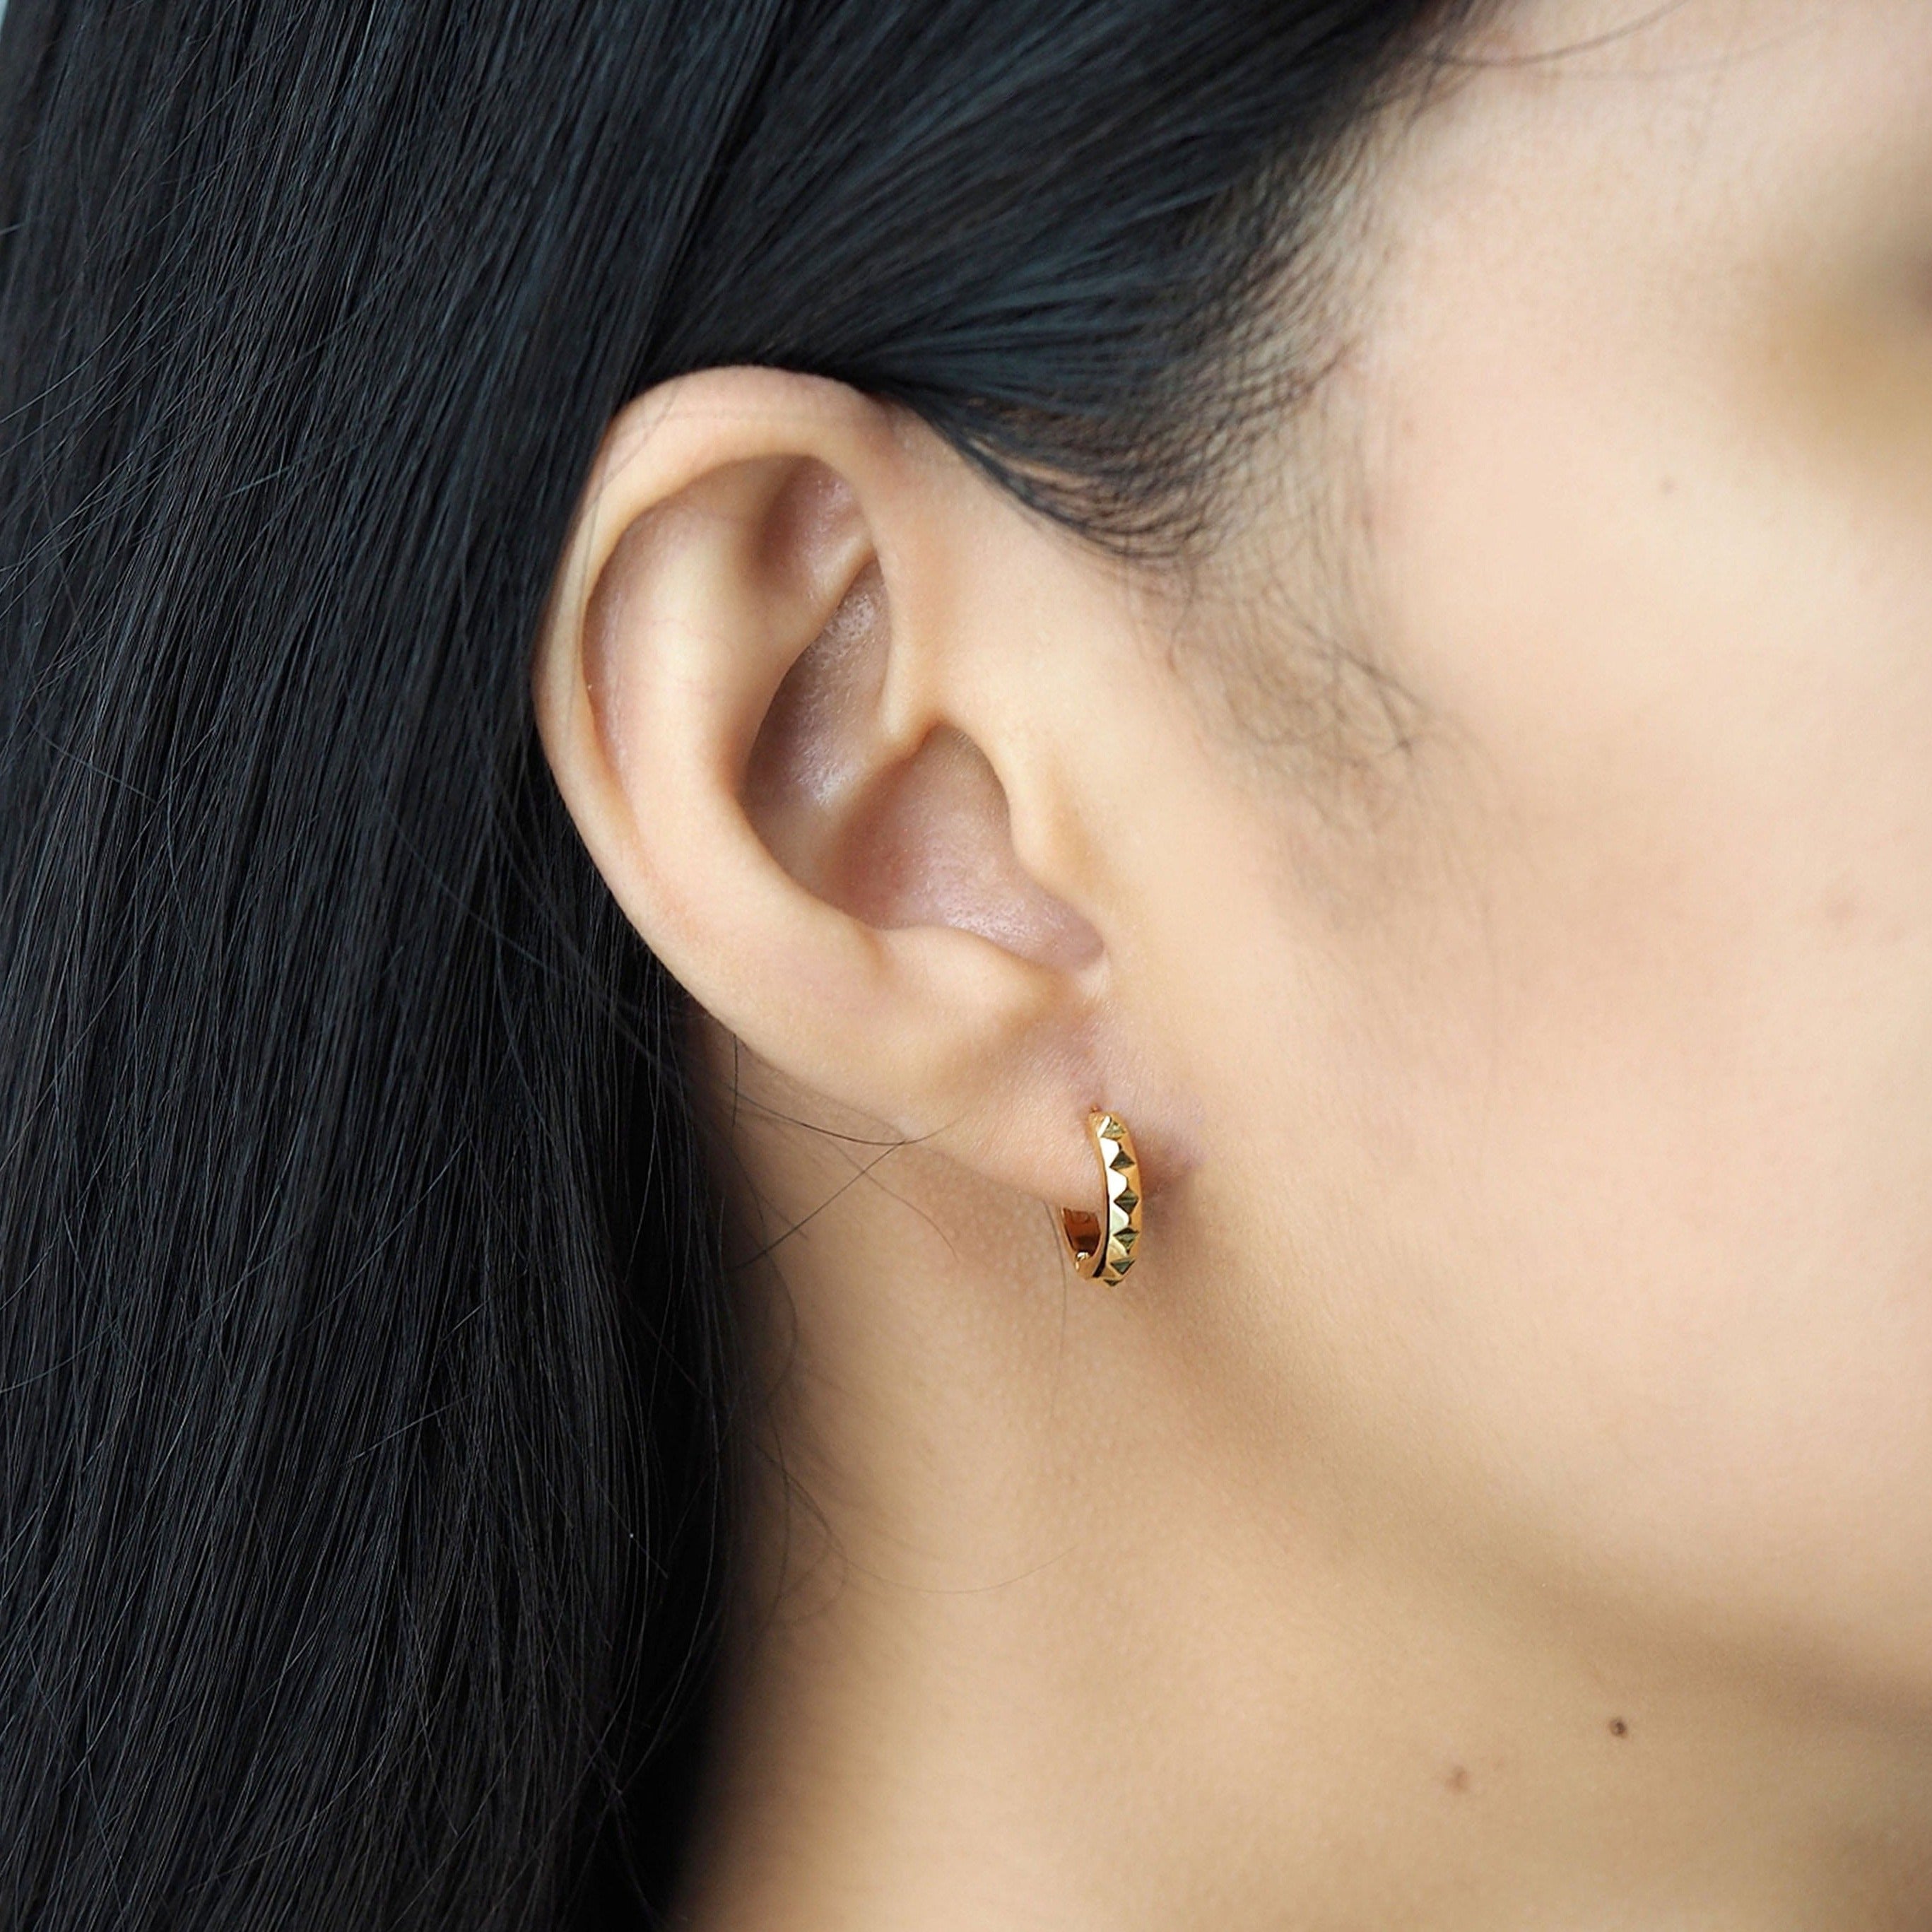 TAI JEWELRY Earrings Pyramid Huggies